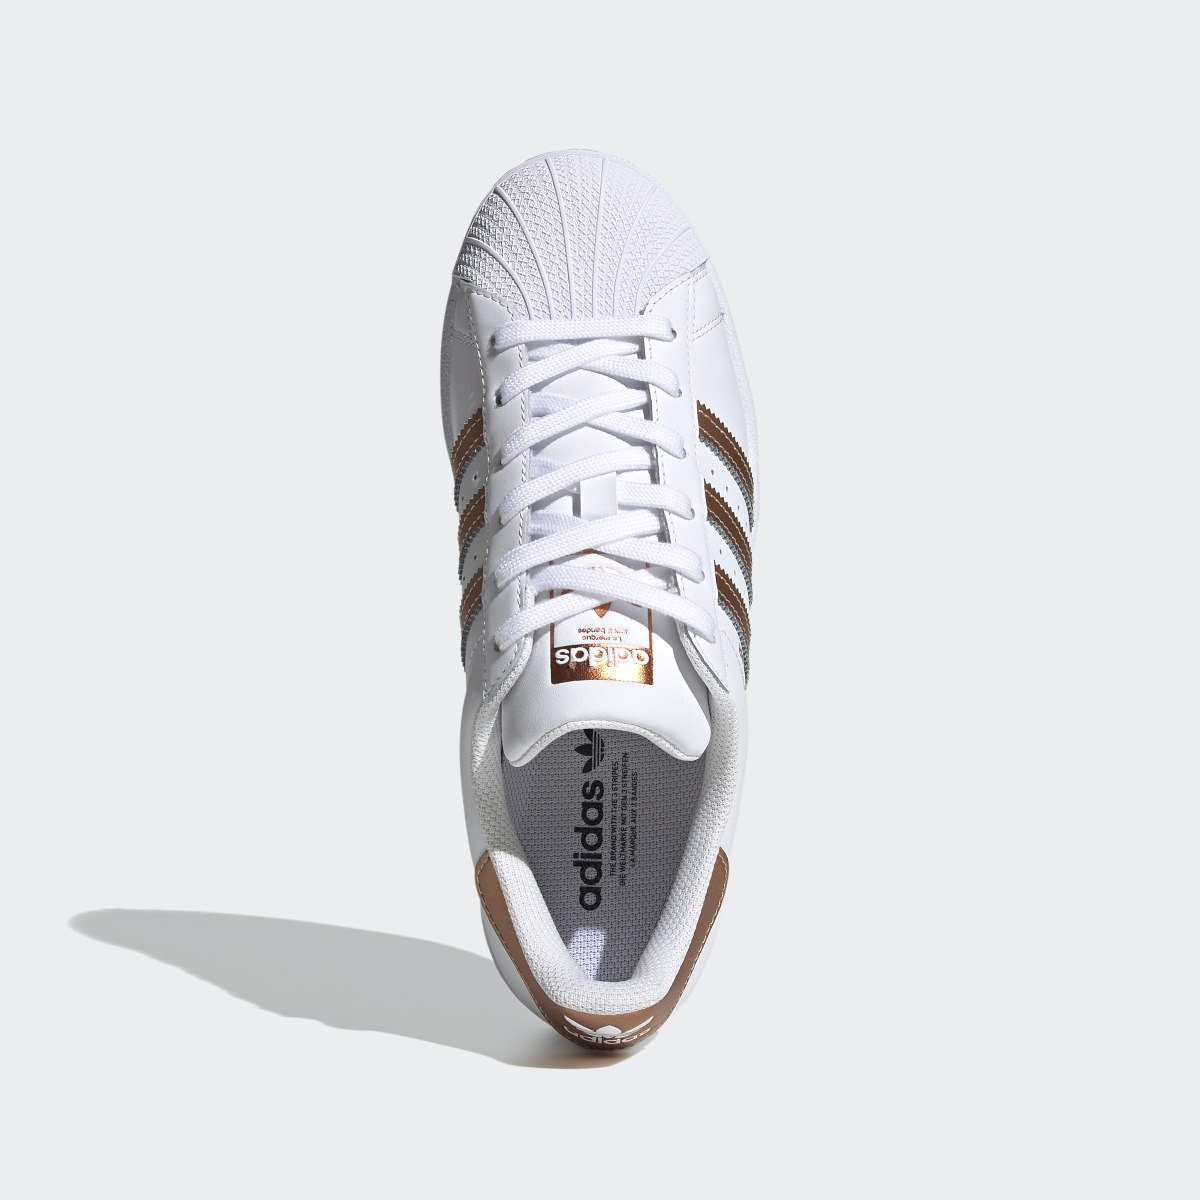 Adidas Superstar Schuh. 4